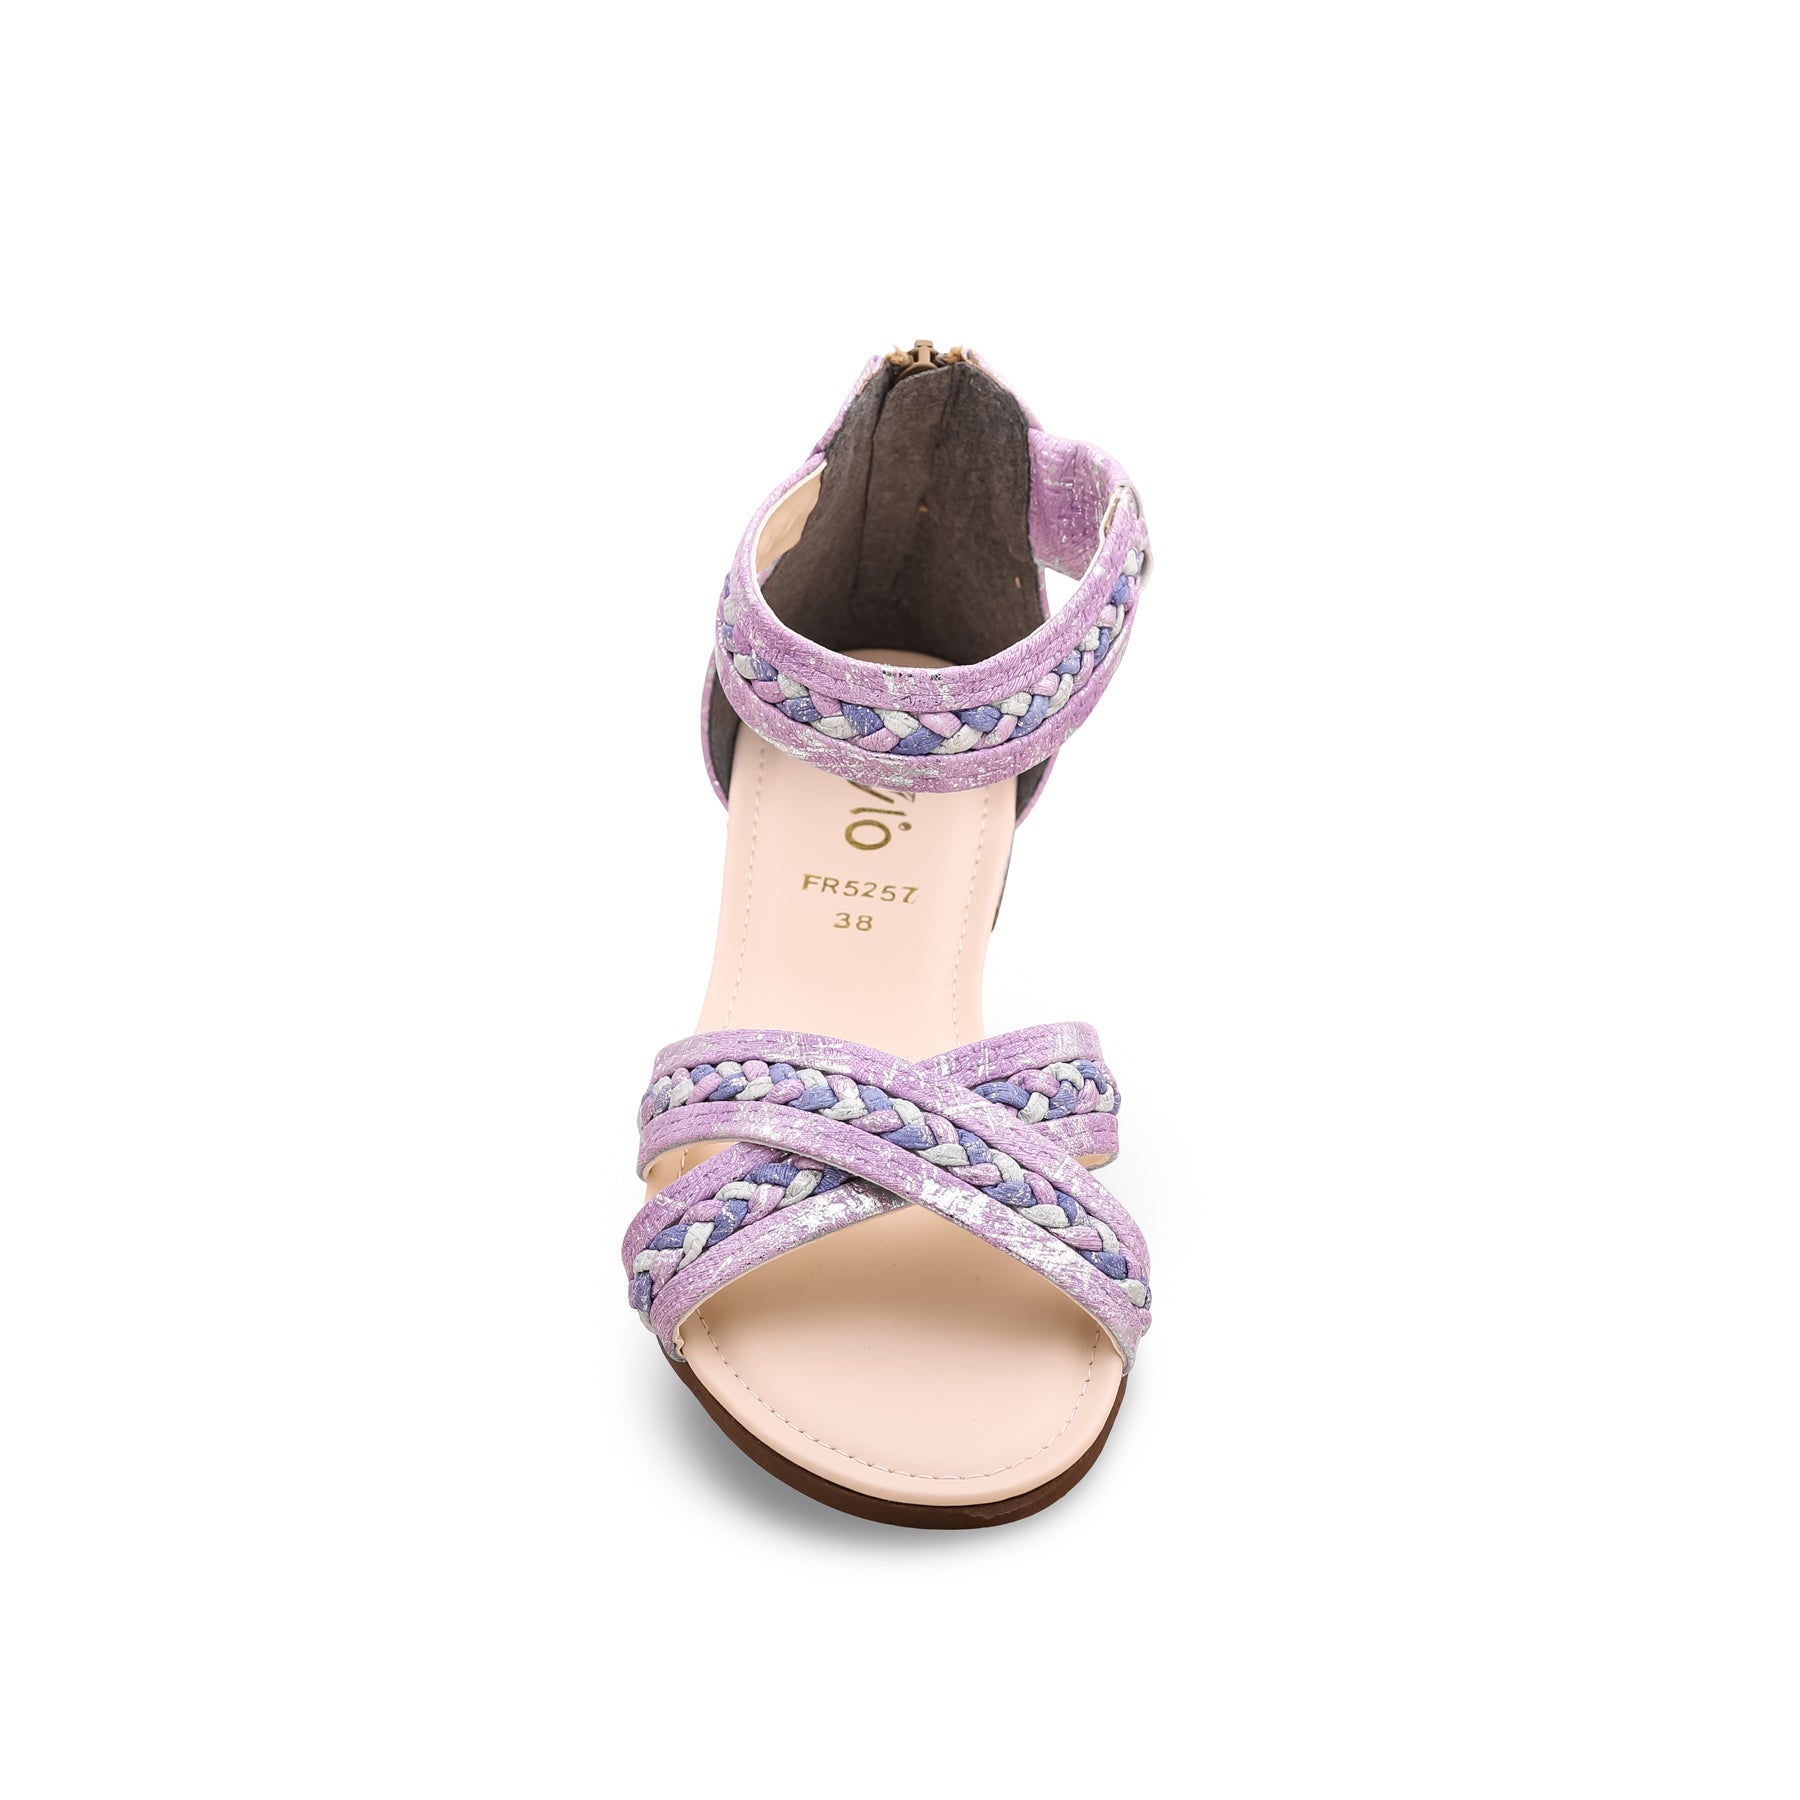 Purple Formal Sandal FR5257